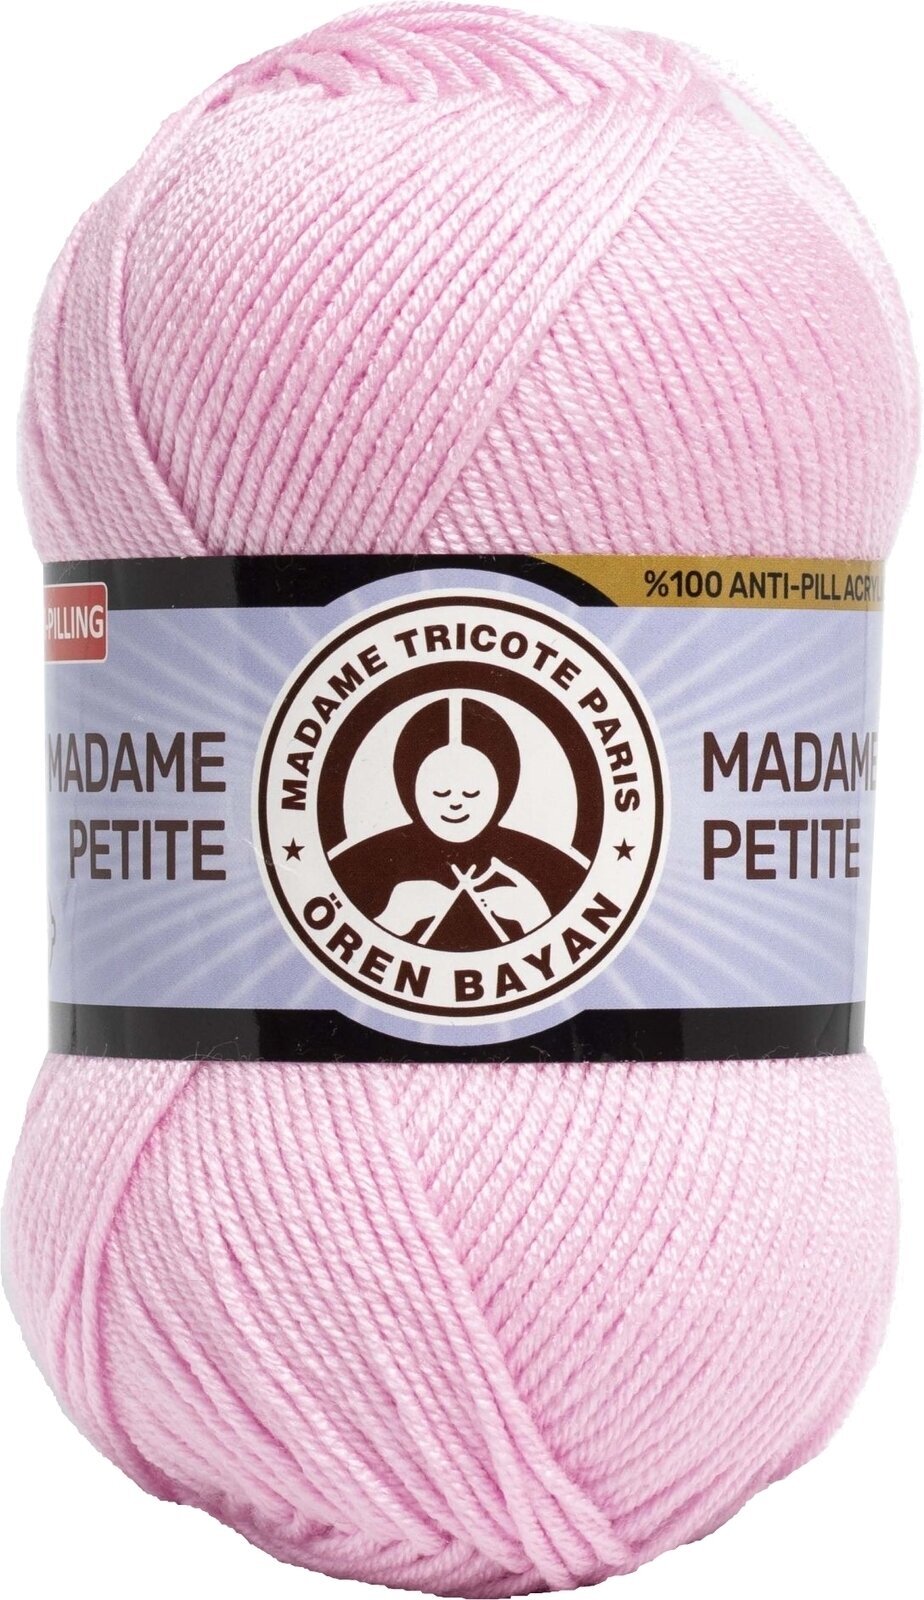 Fire de tricotat Madame Tricote Paris Madame Petite 3848 93 Fire de tricotat